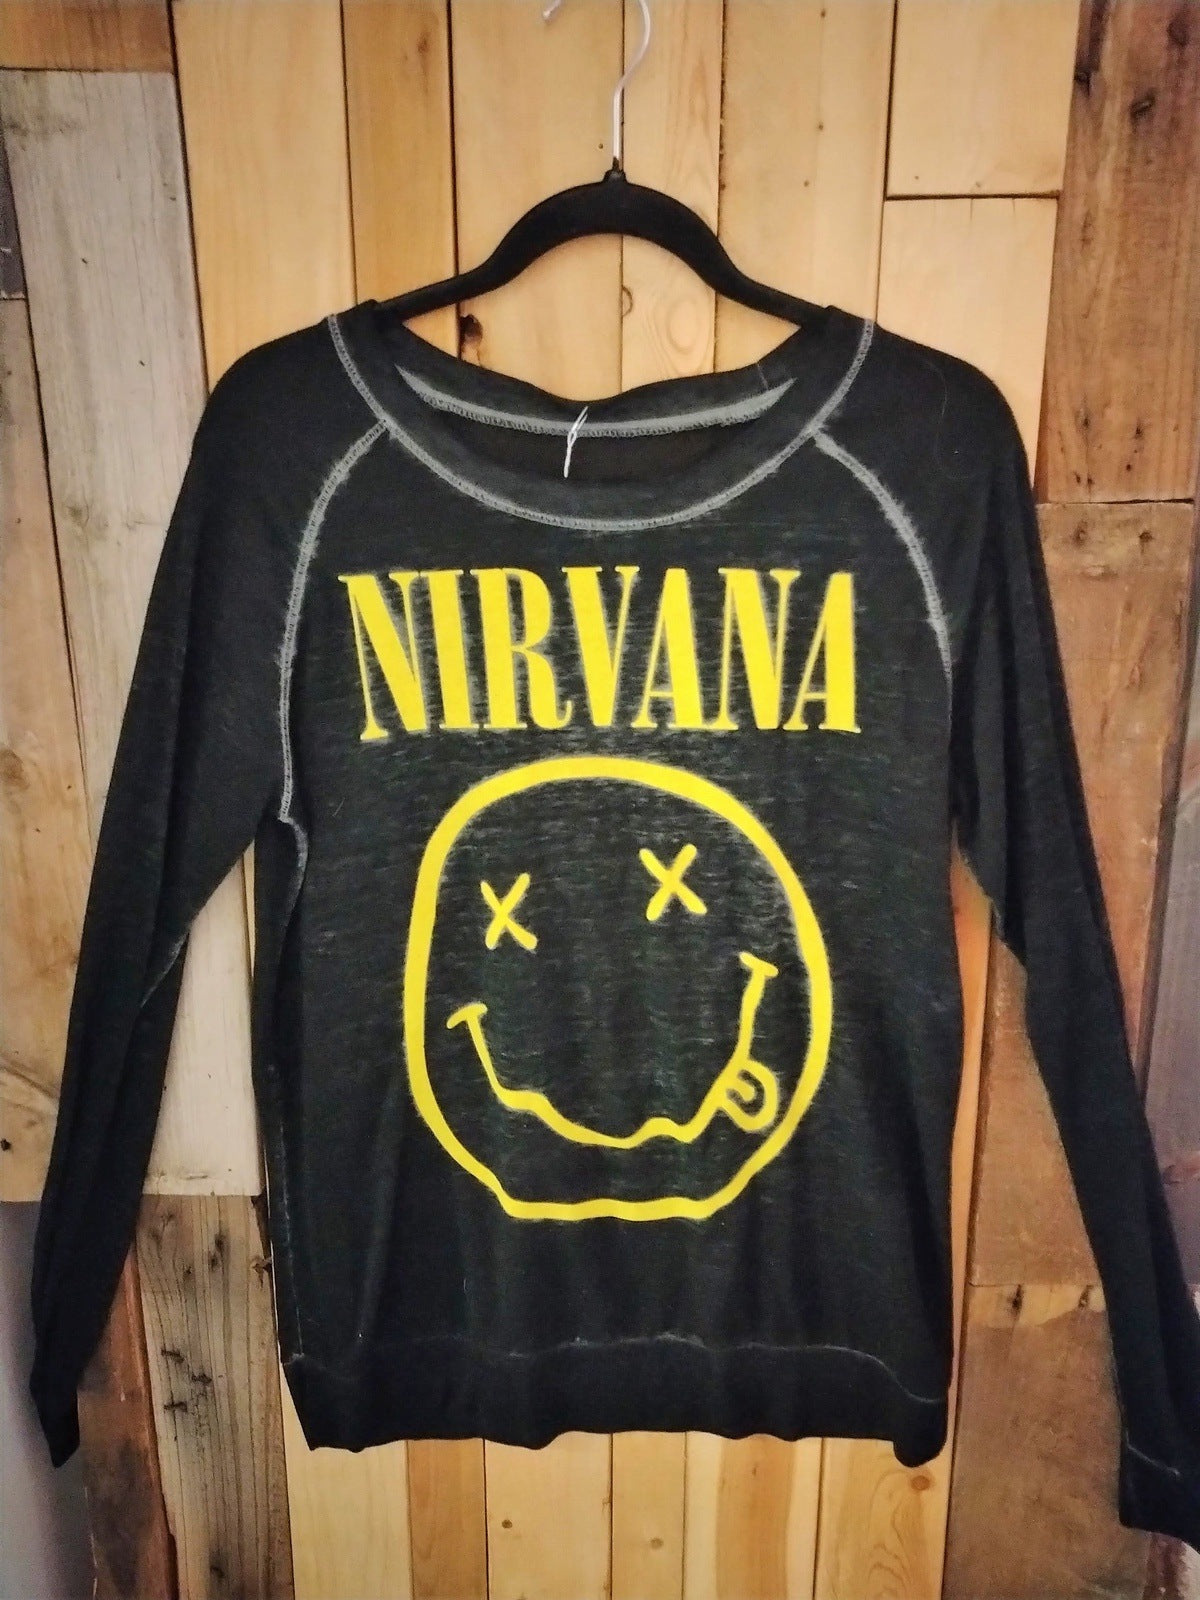 Nirvana Semi Sheer Women's Shirt Size Medium Long Sleeve